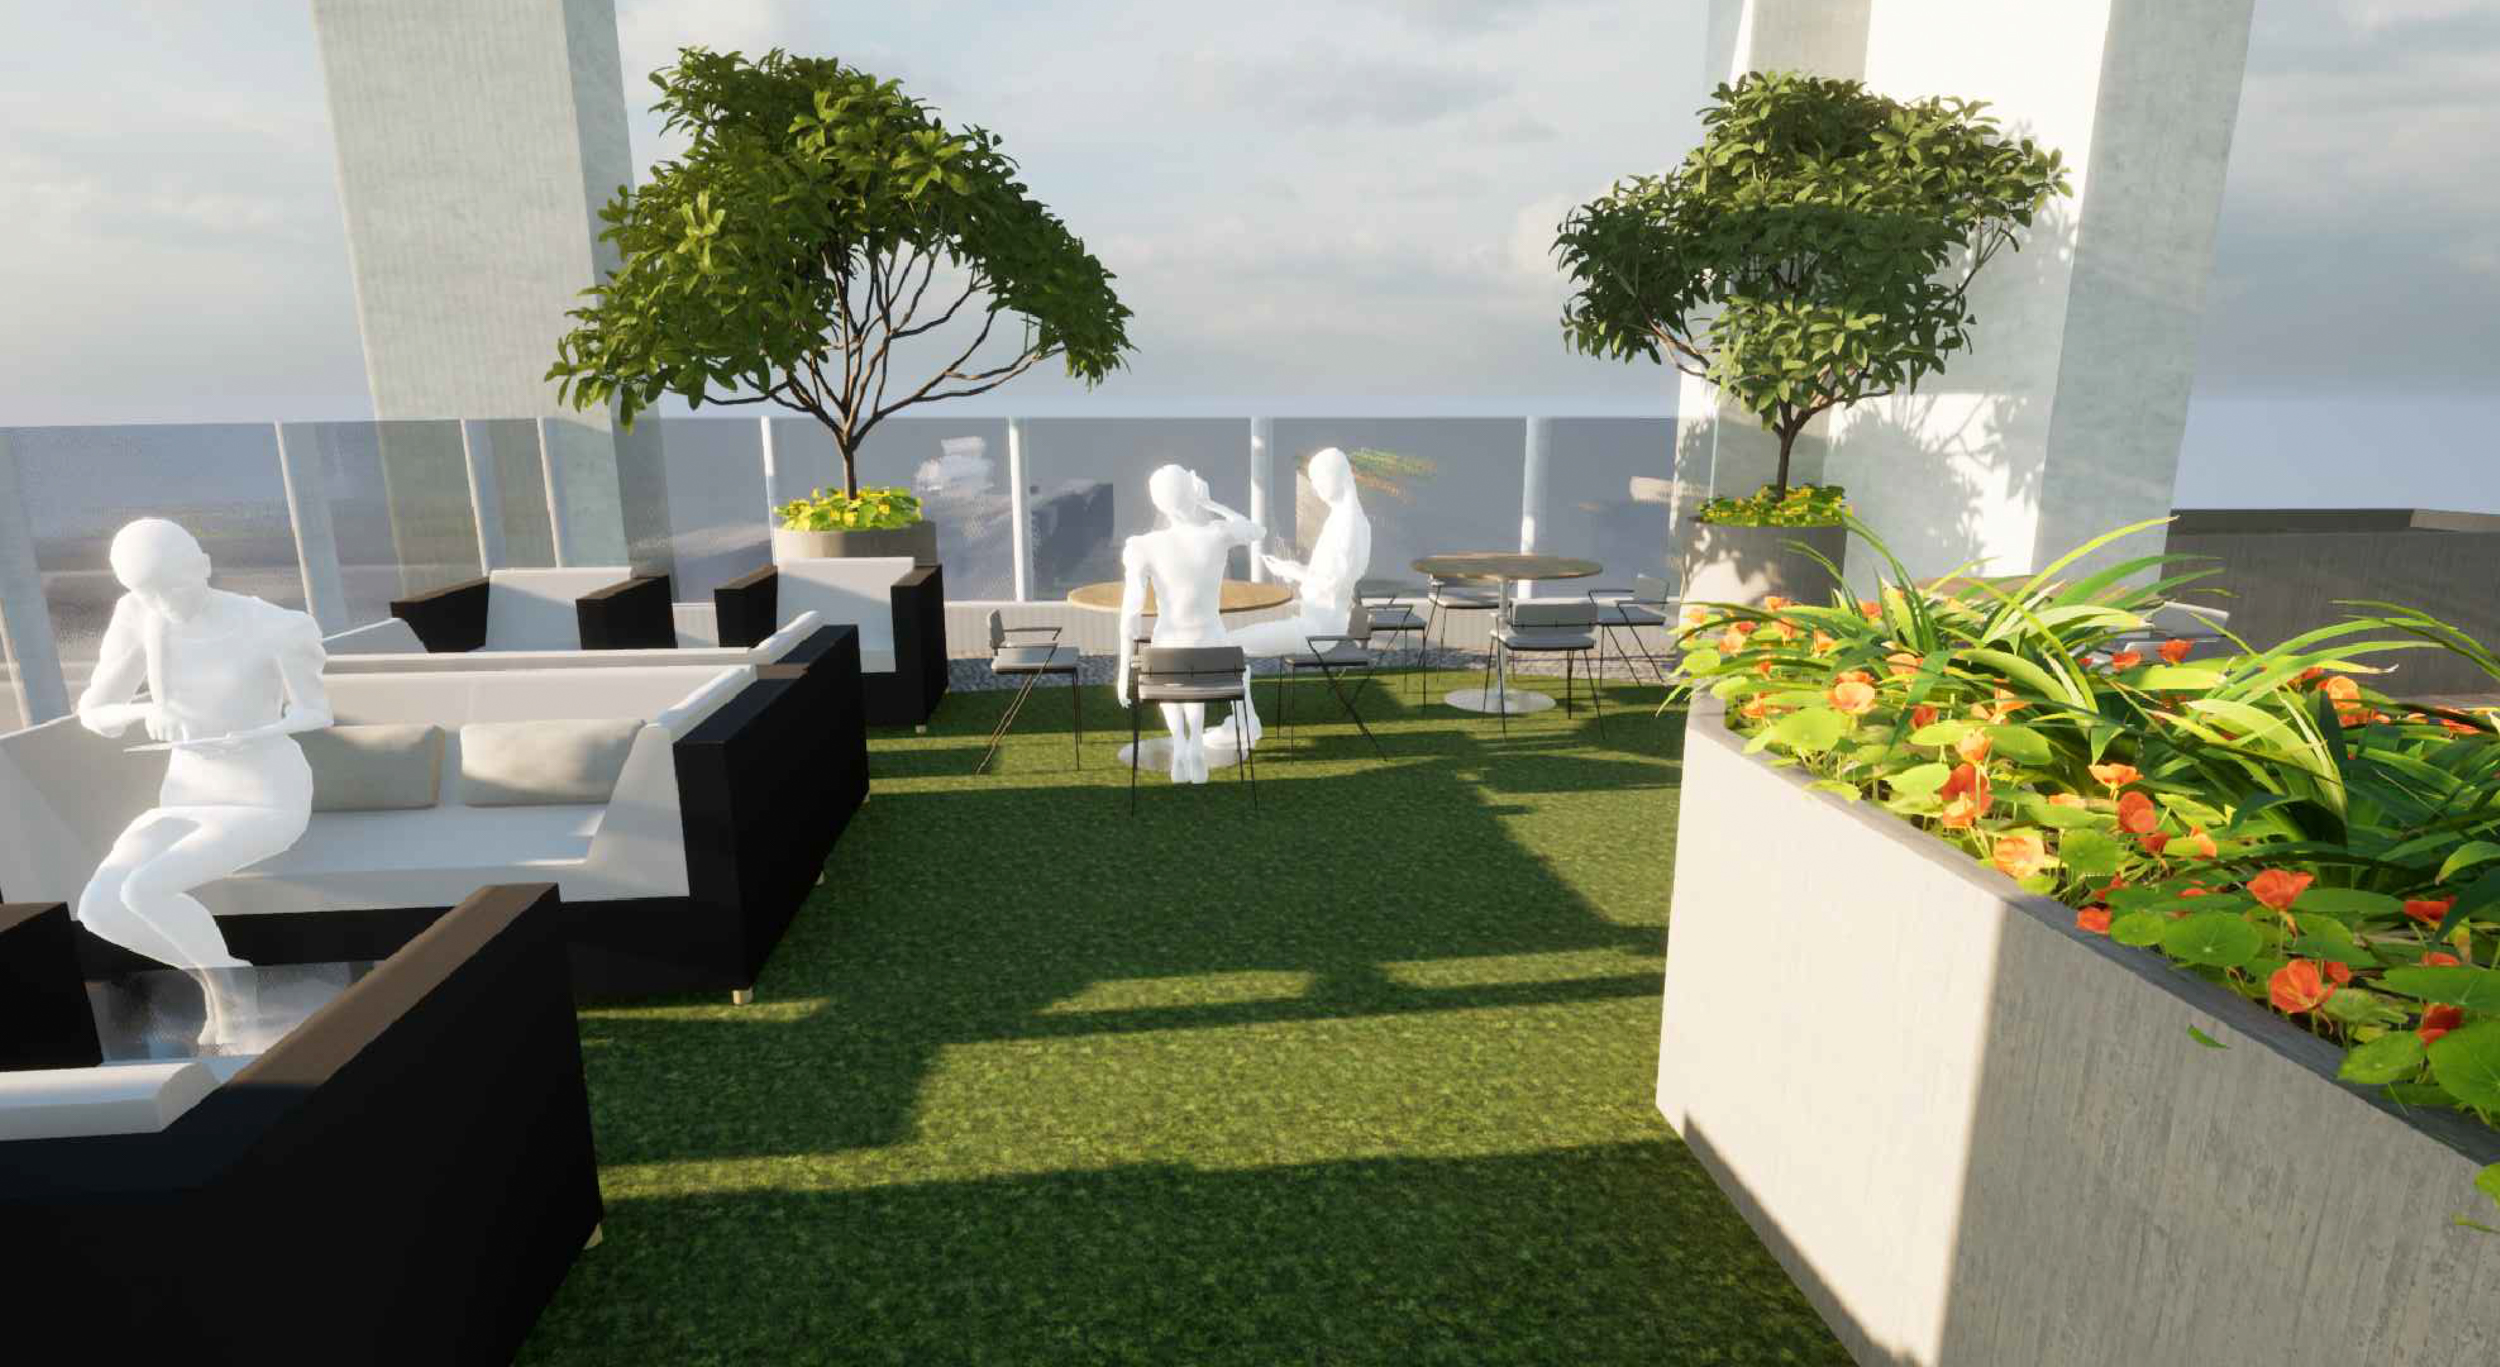 2190 Shattuck Avenue rooftop deck amenities, rendering by Trachtenberg Architects